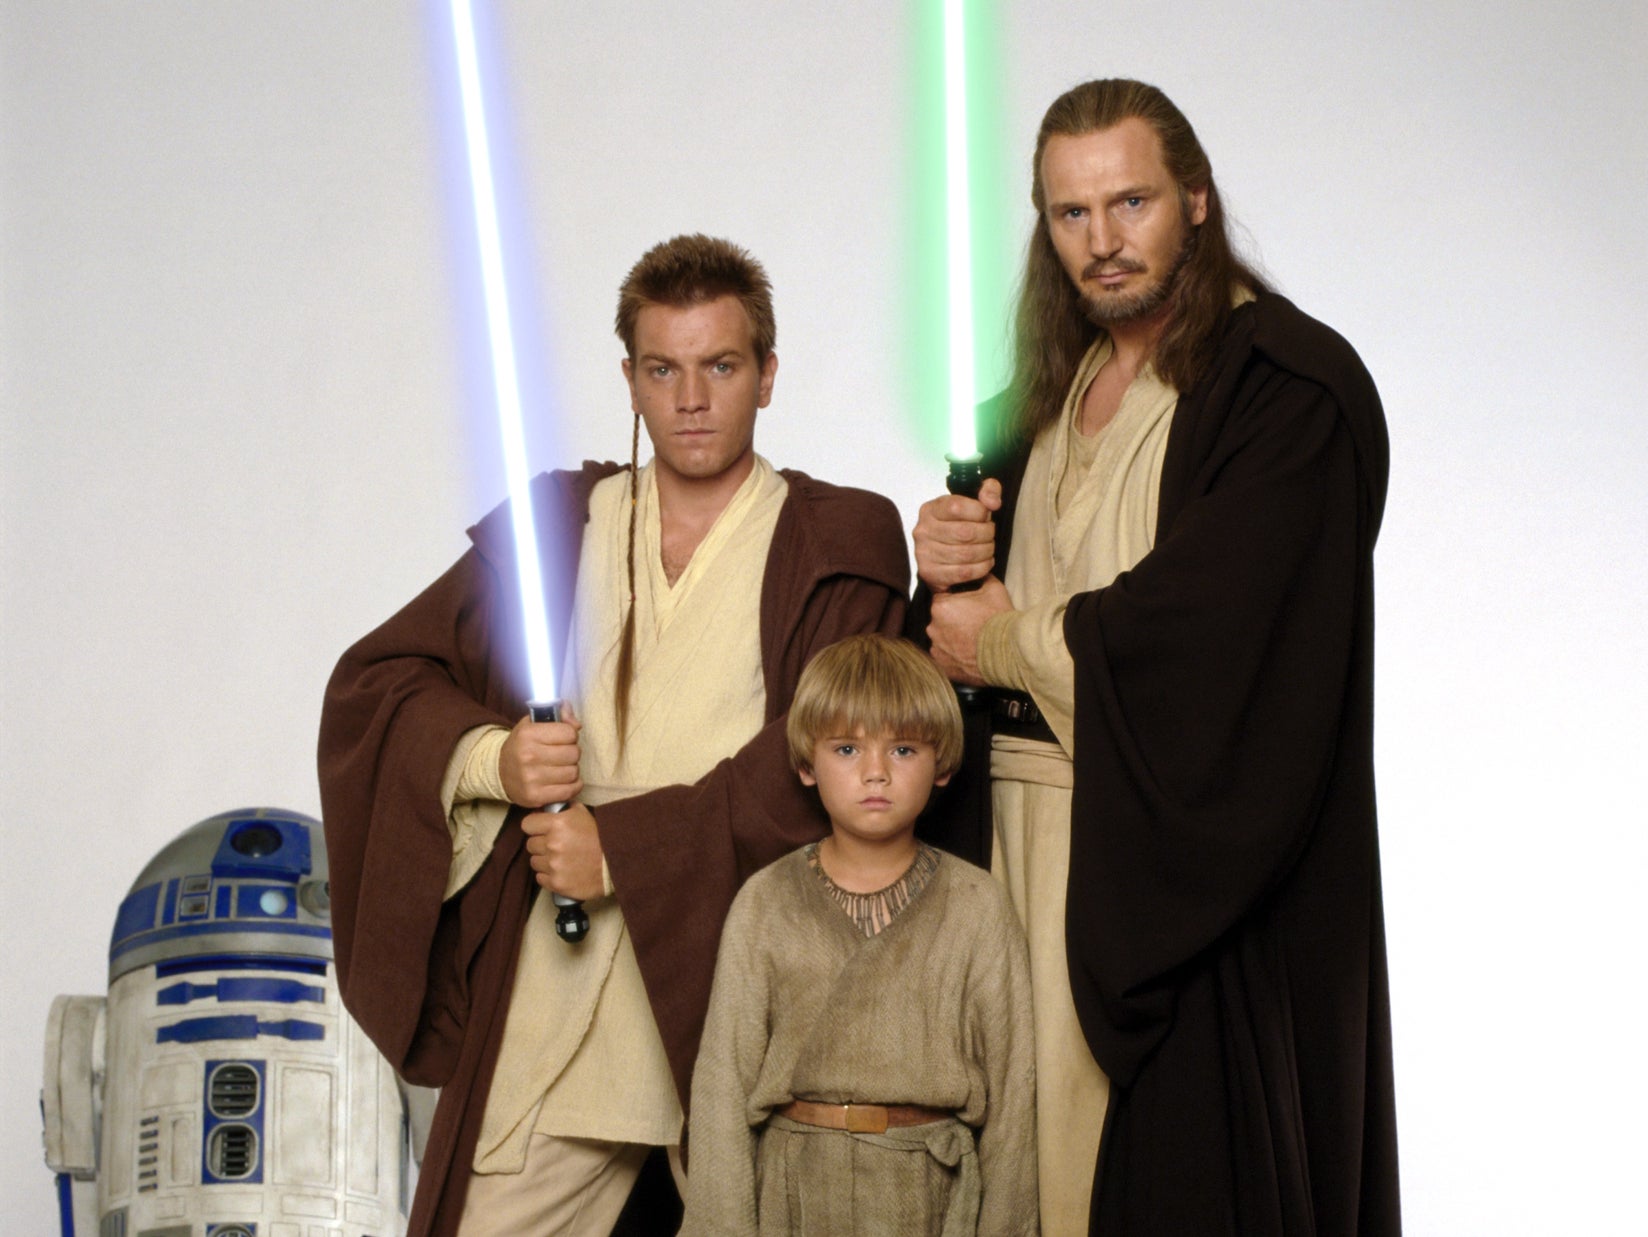 Jake Lloyd played Anakin Skywalker alongside Liam Neeson and Ewan McGregor